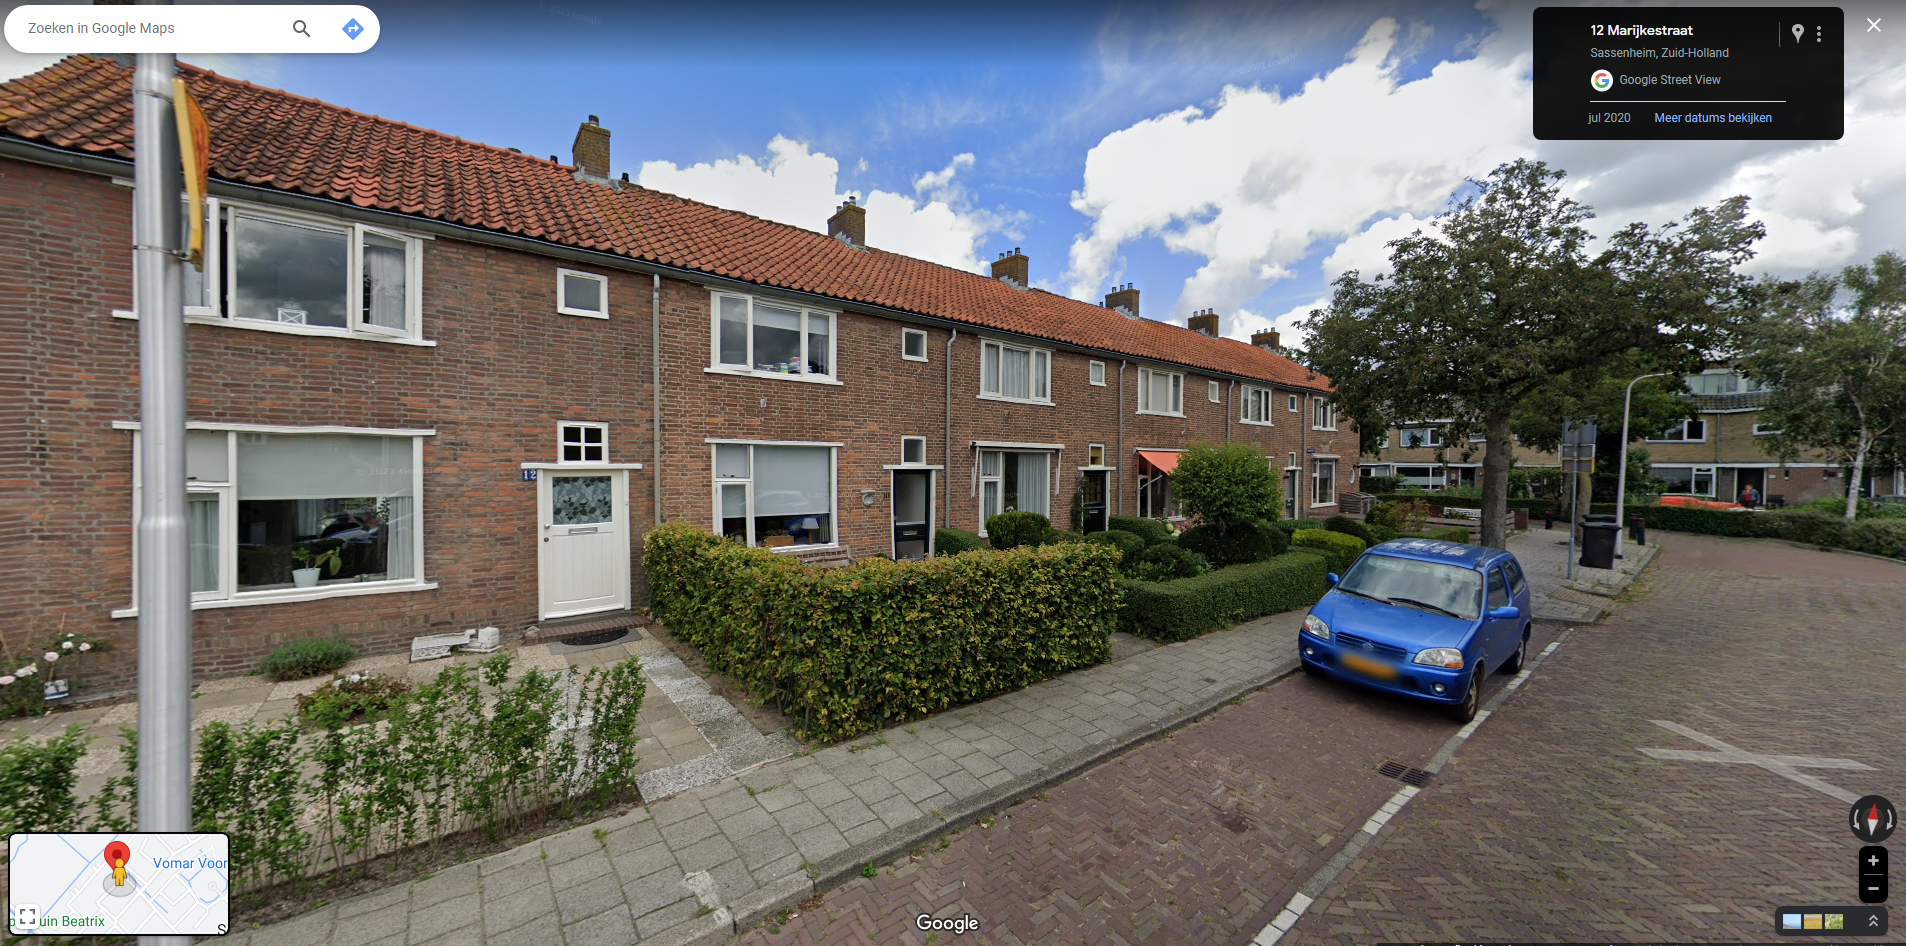 Marijkestraat 8, 2171 XD Sassenheim, Nederland